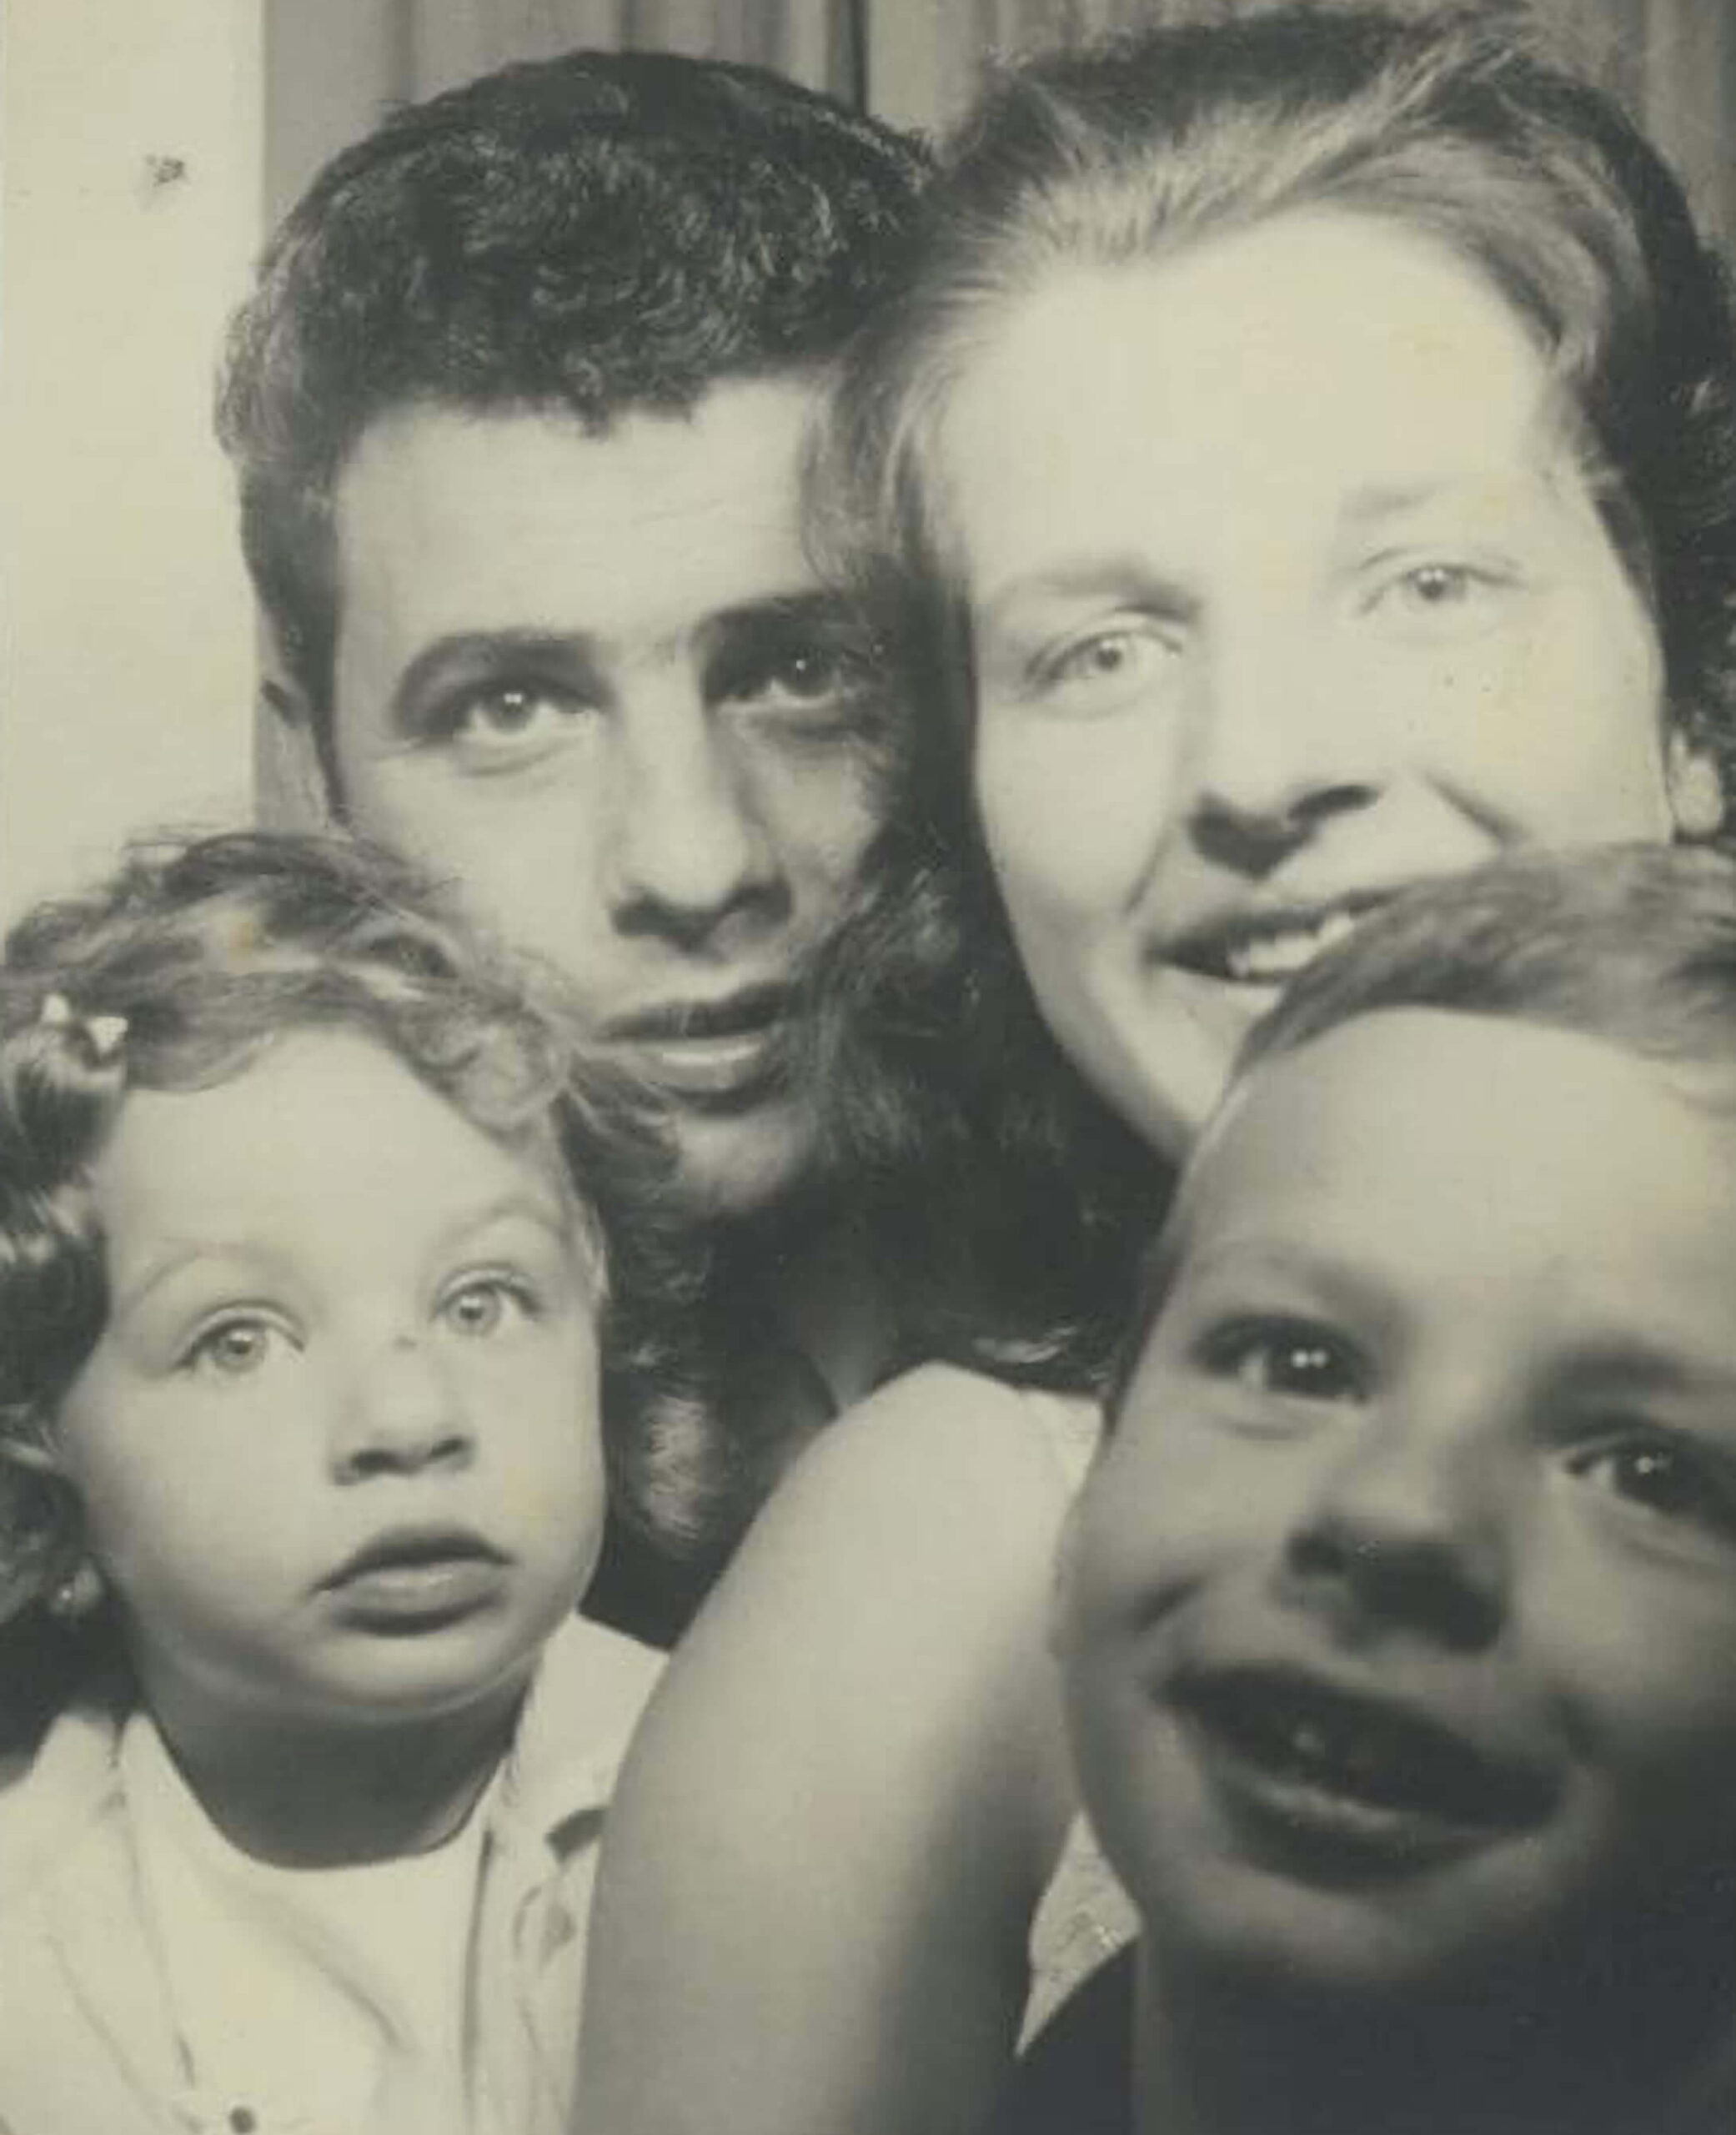 Filippo-Navarra-and-Family-Closeup-Selfie